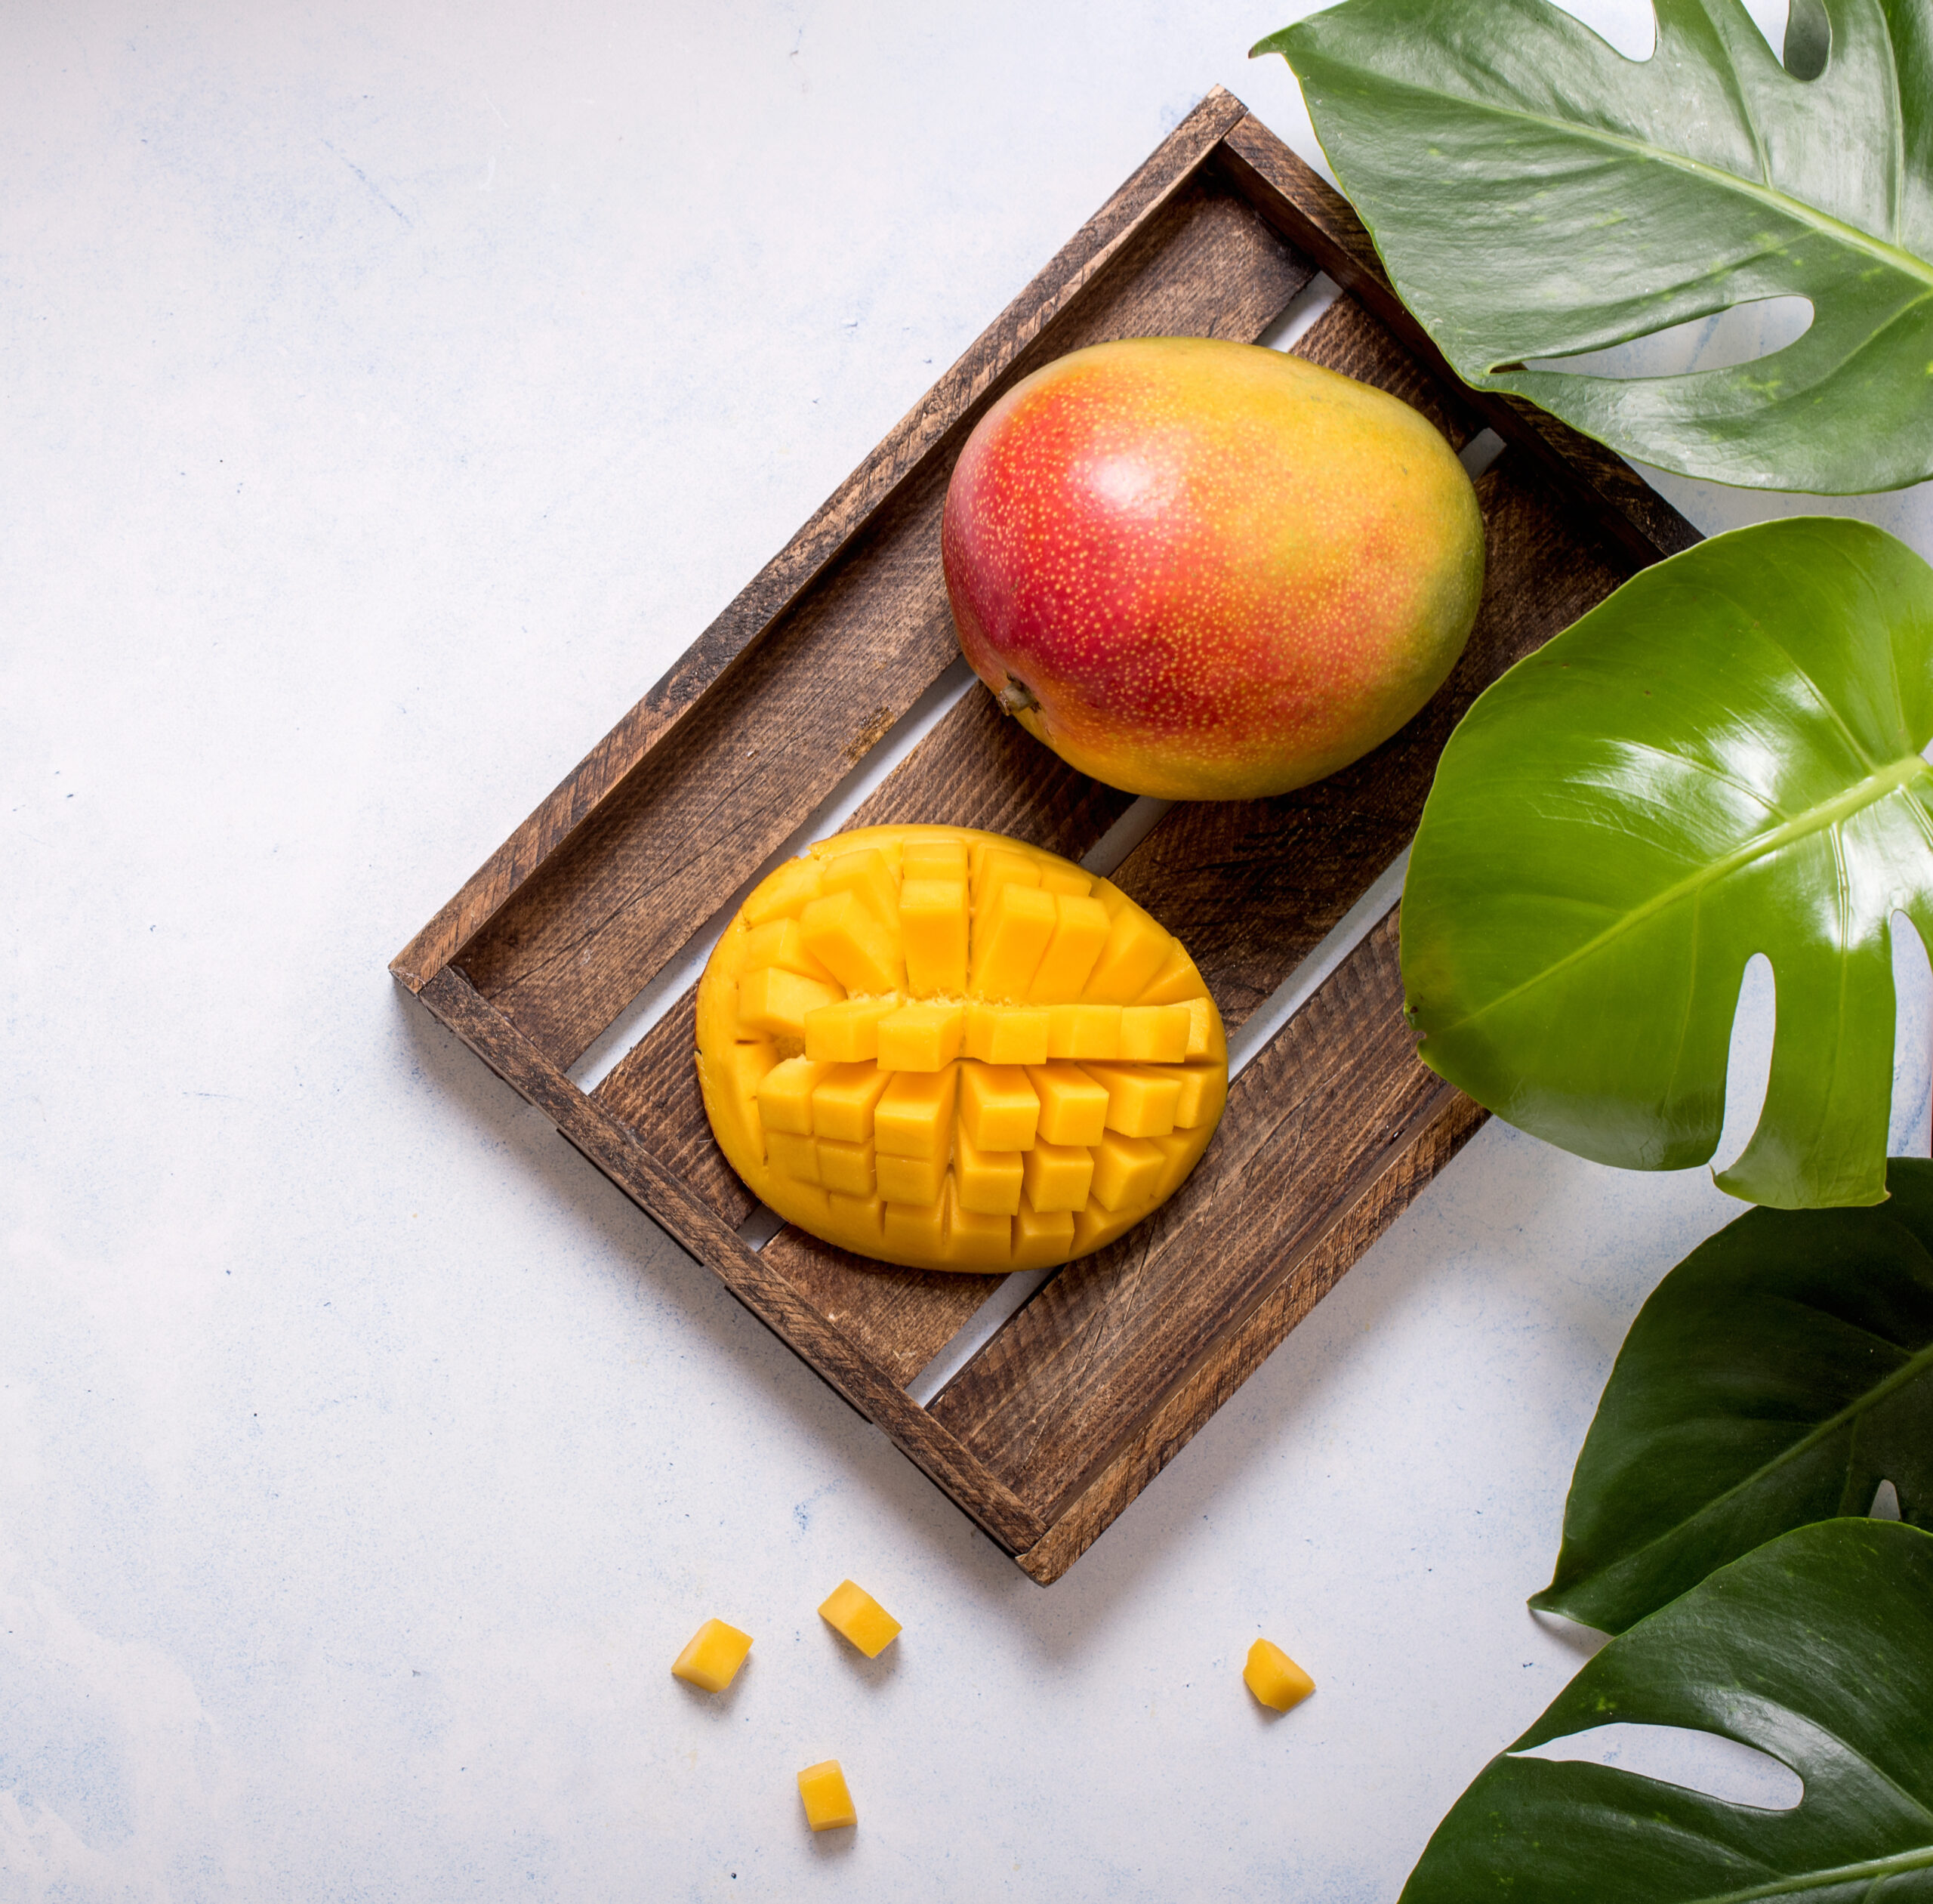 Peruvian Mango | https://fruitsauction.com/